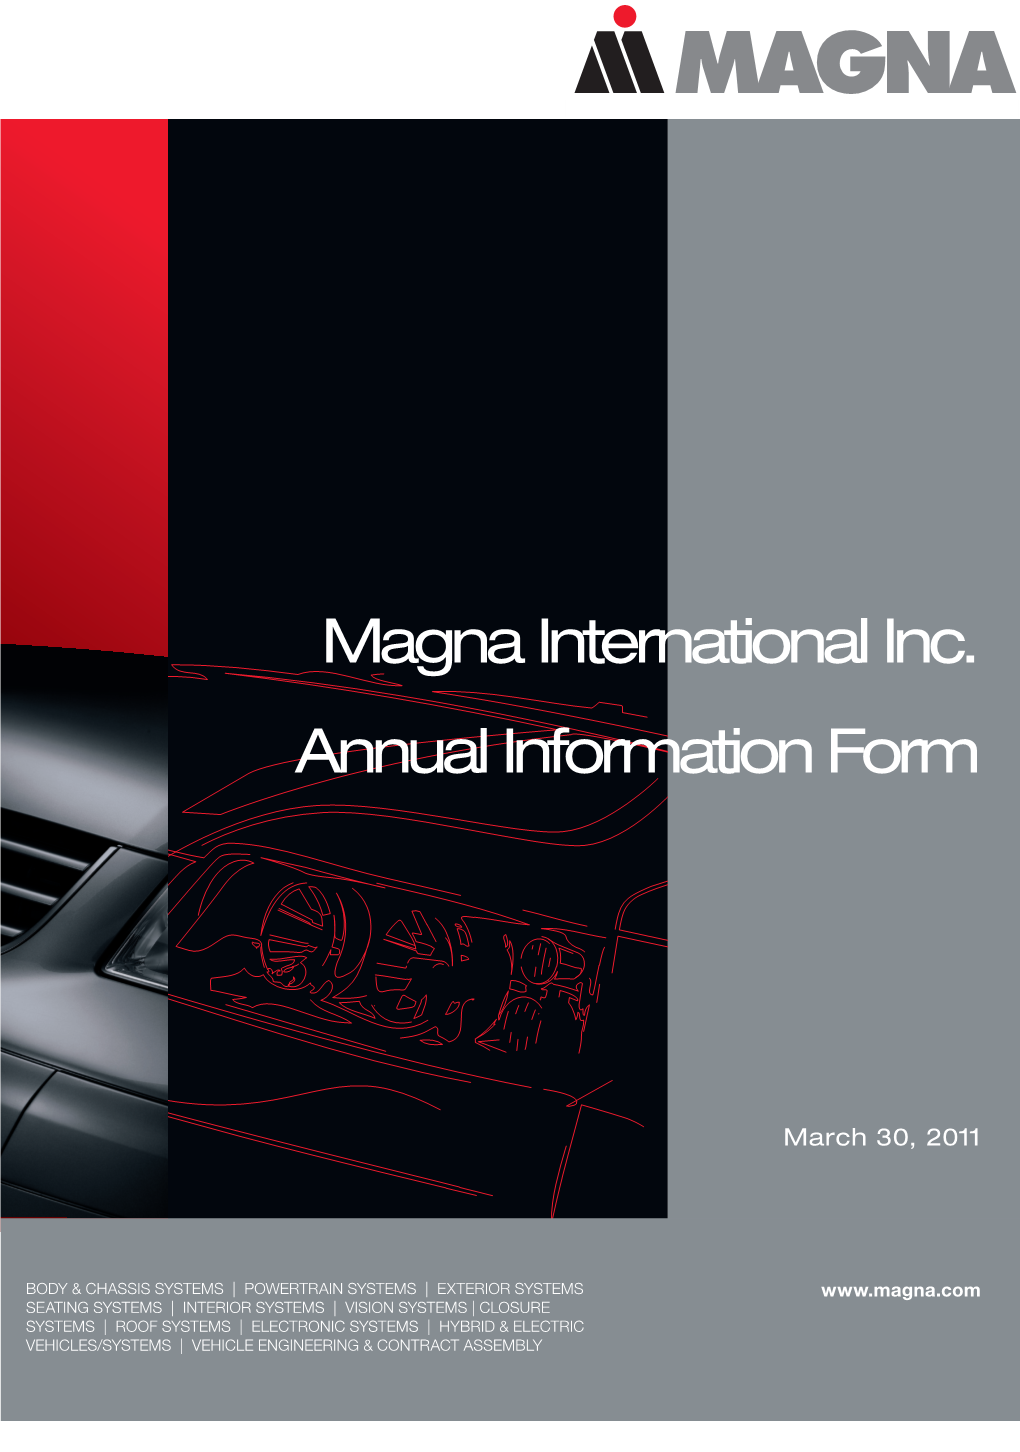 Magna International Inc. Annual Information Form